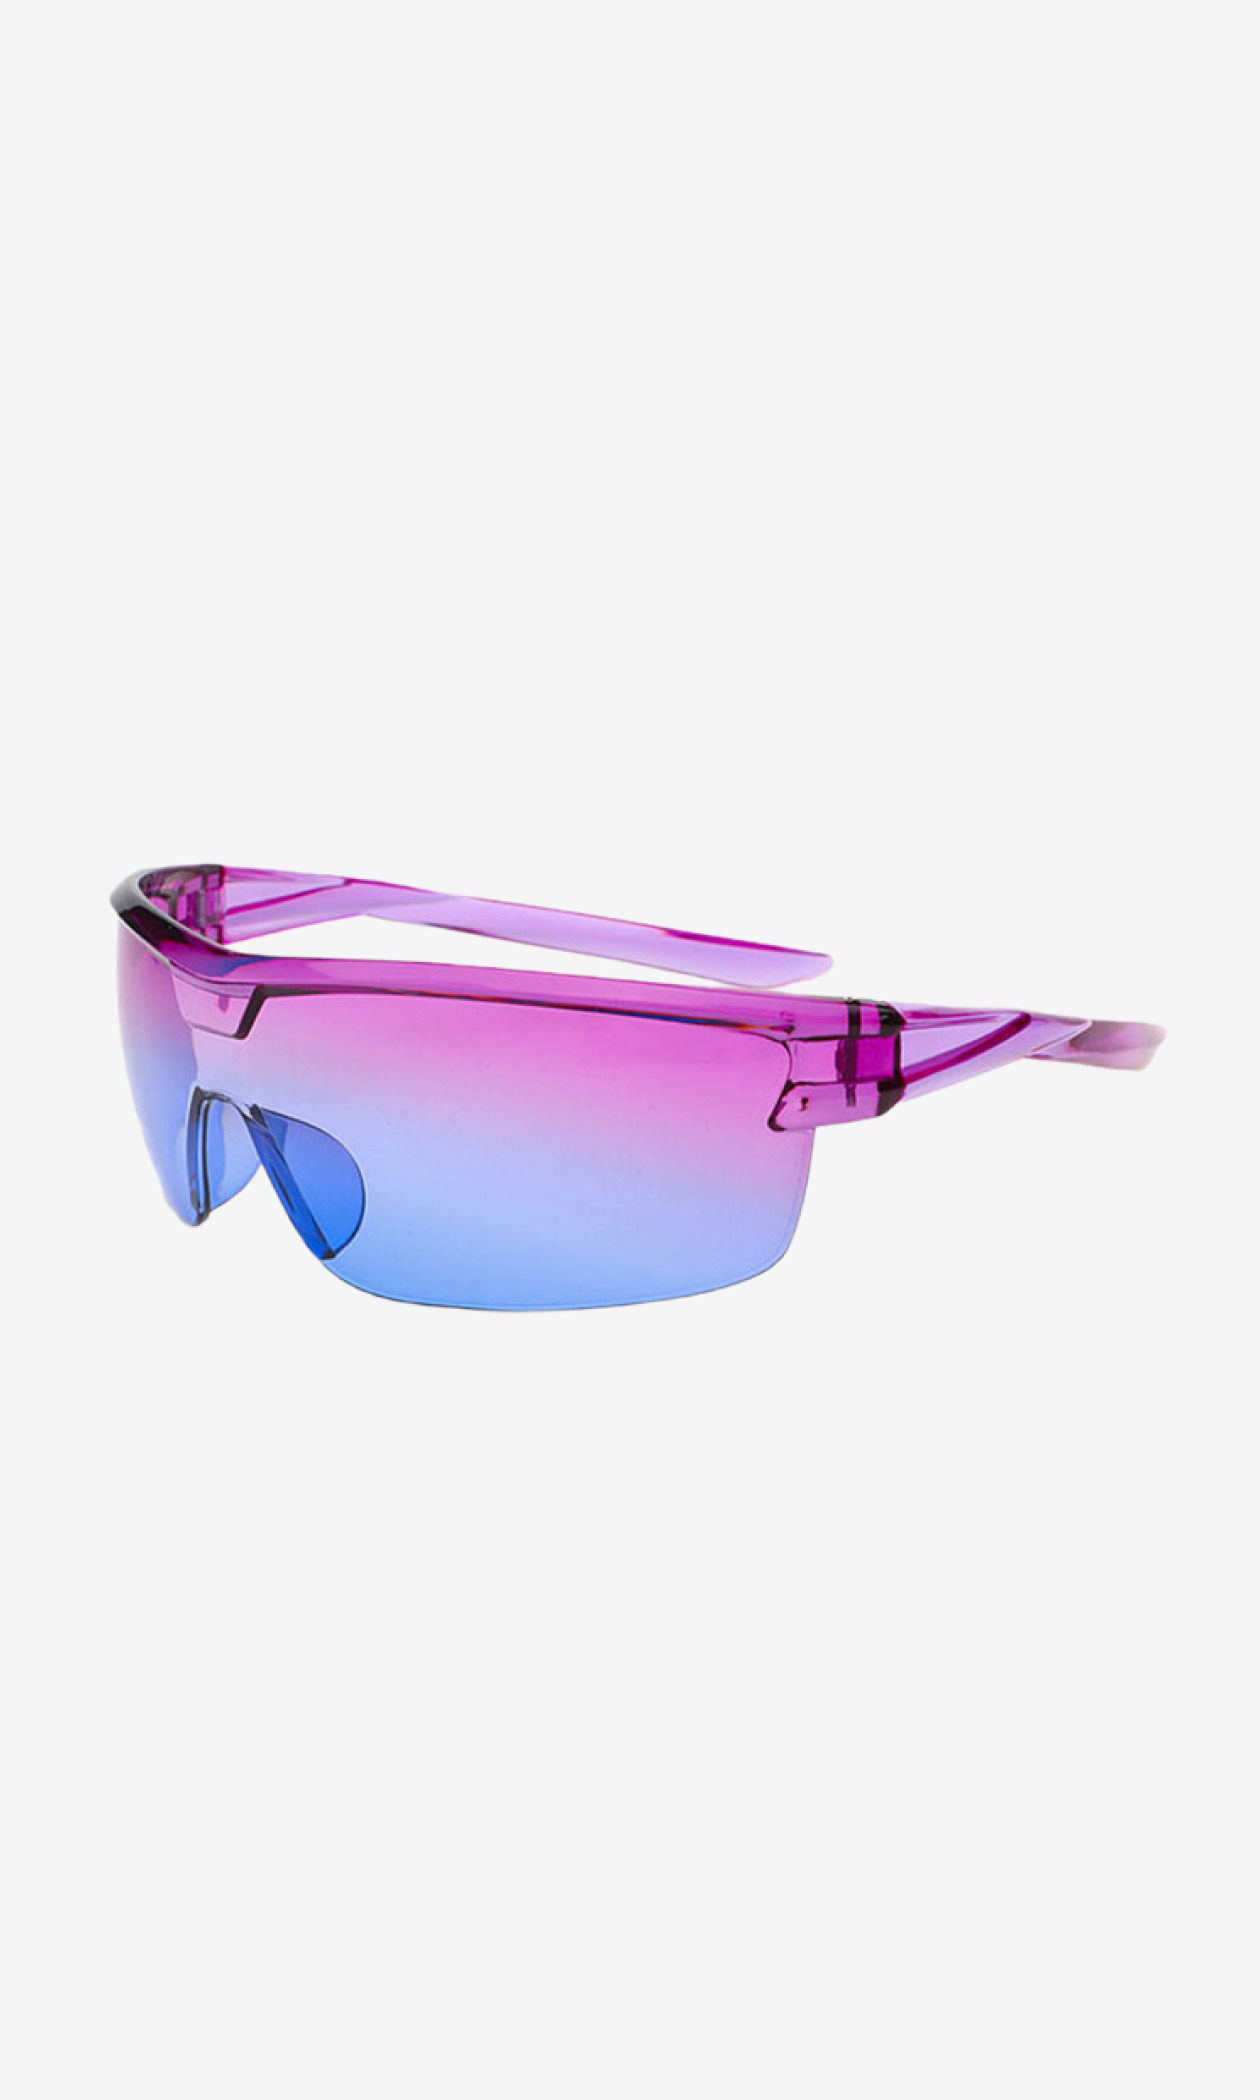 sunglasses-sport-purple-blue